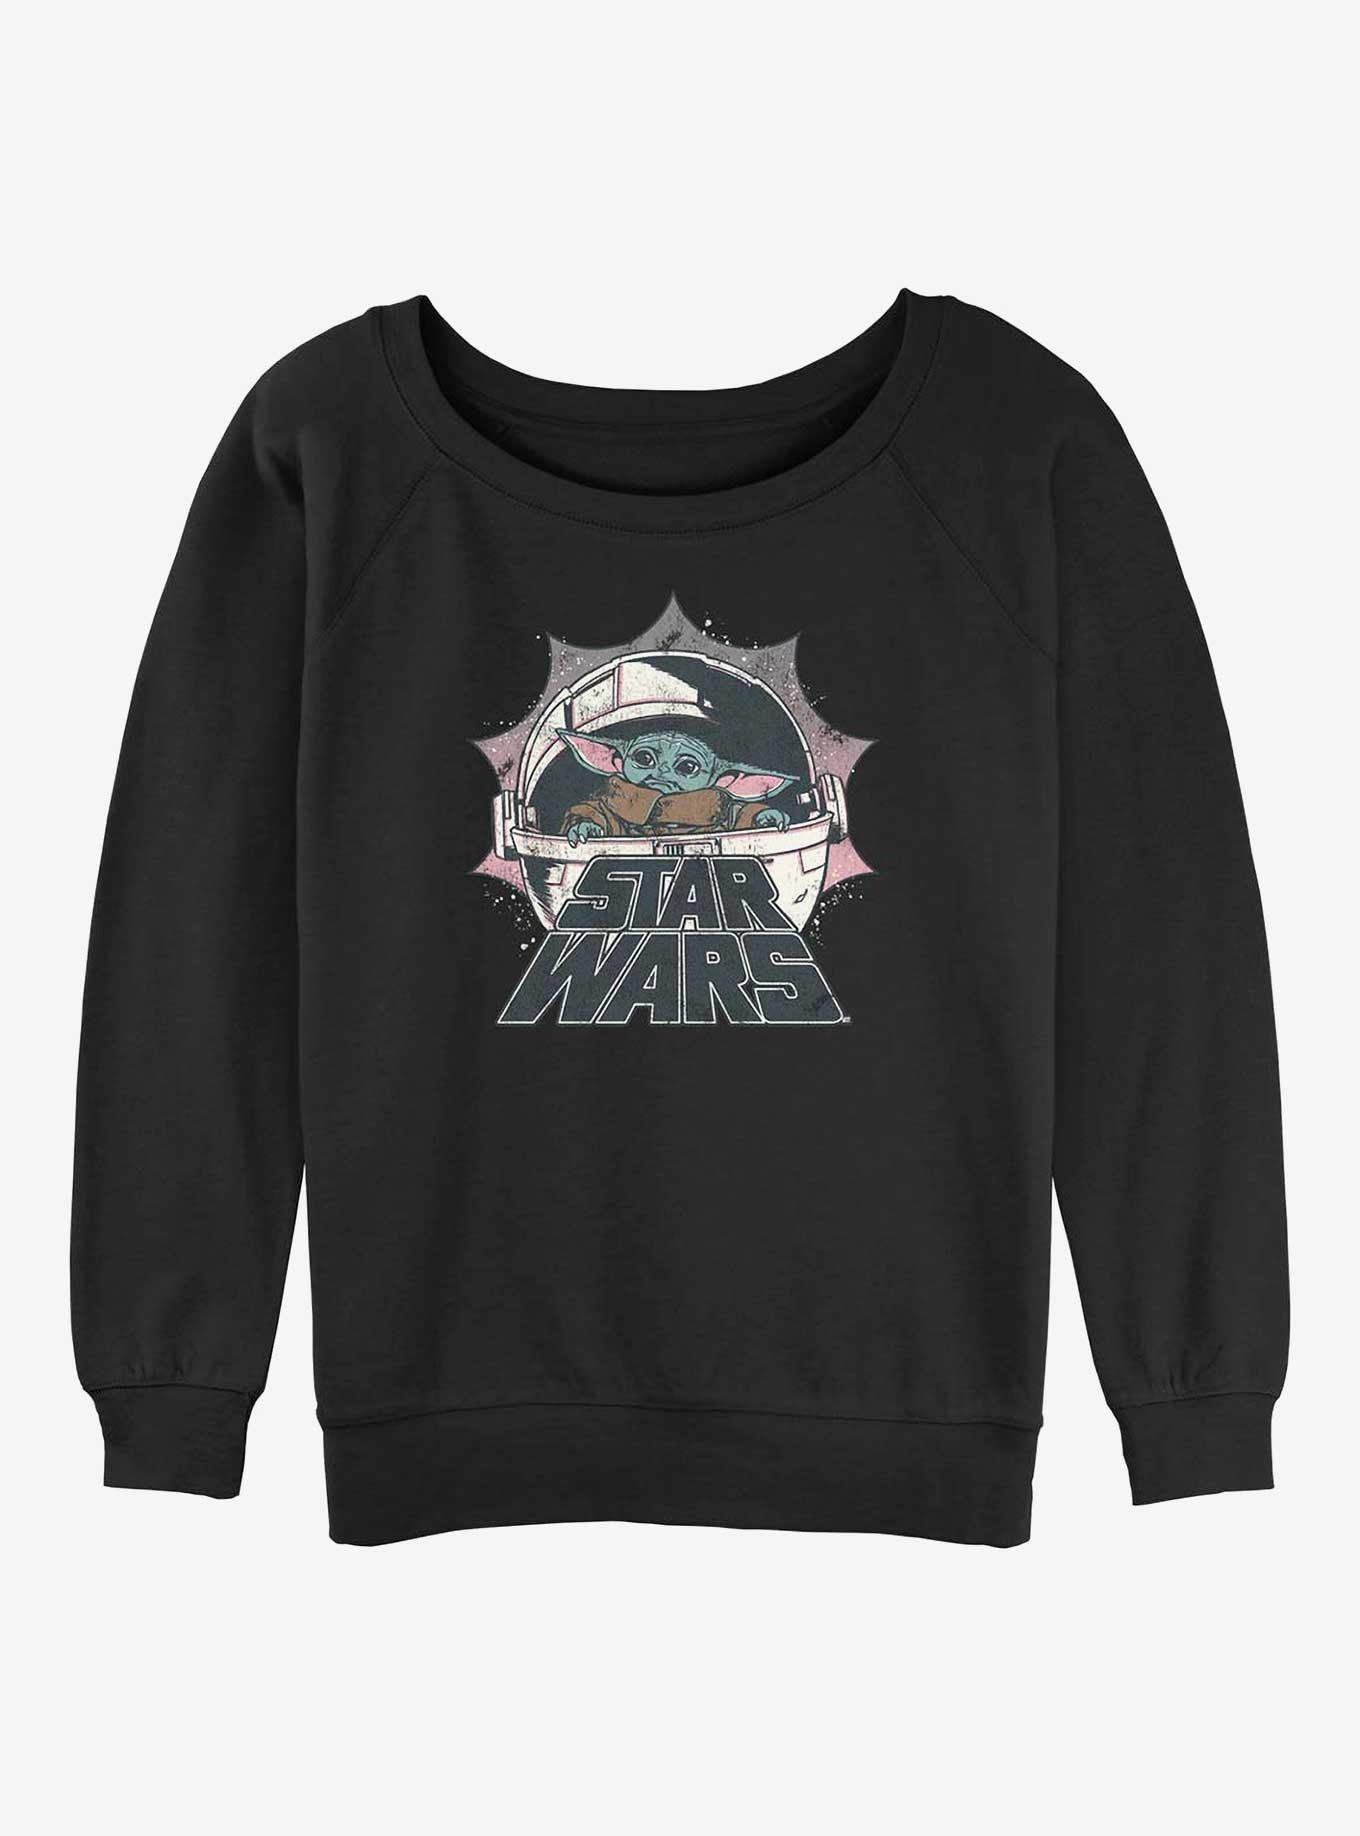 Star Wars The Mandalorian Child Logo Girls Slouchy Sweatshirt, BLACK, hi-res